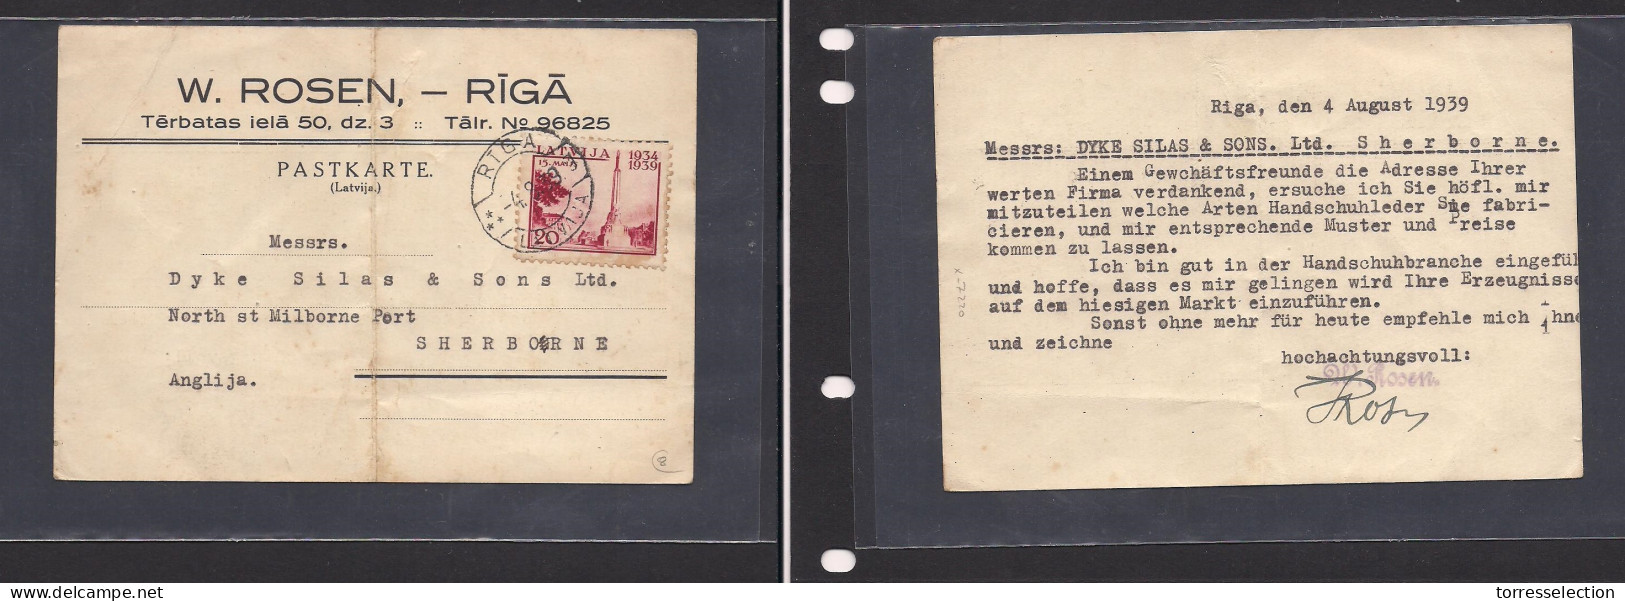 LATVIA. Latvia Cover 1939 Riga To Sherbone Fkd Priv Card. Easy Deal. XSALE. - Latvia